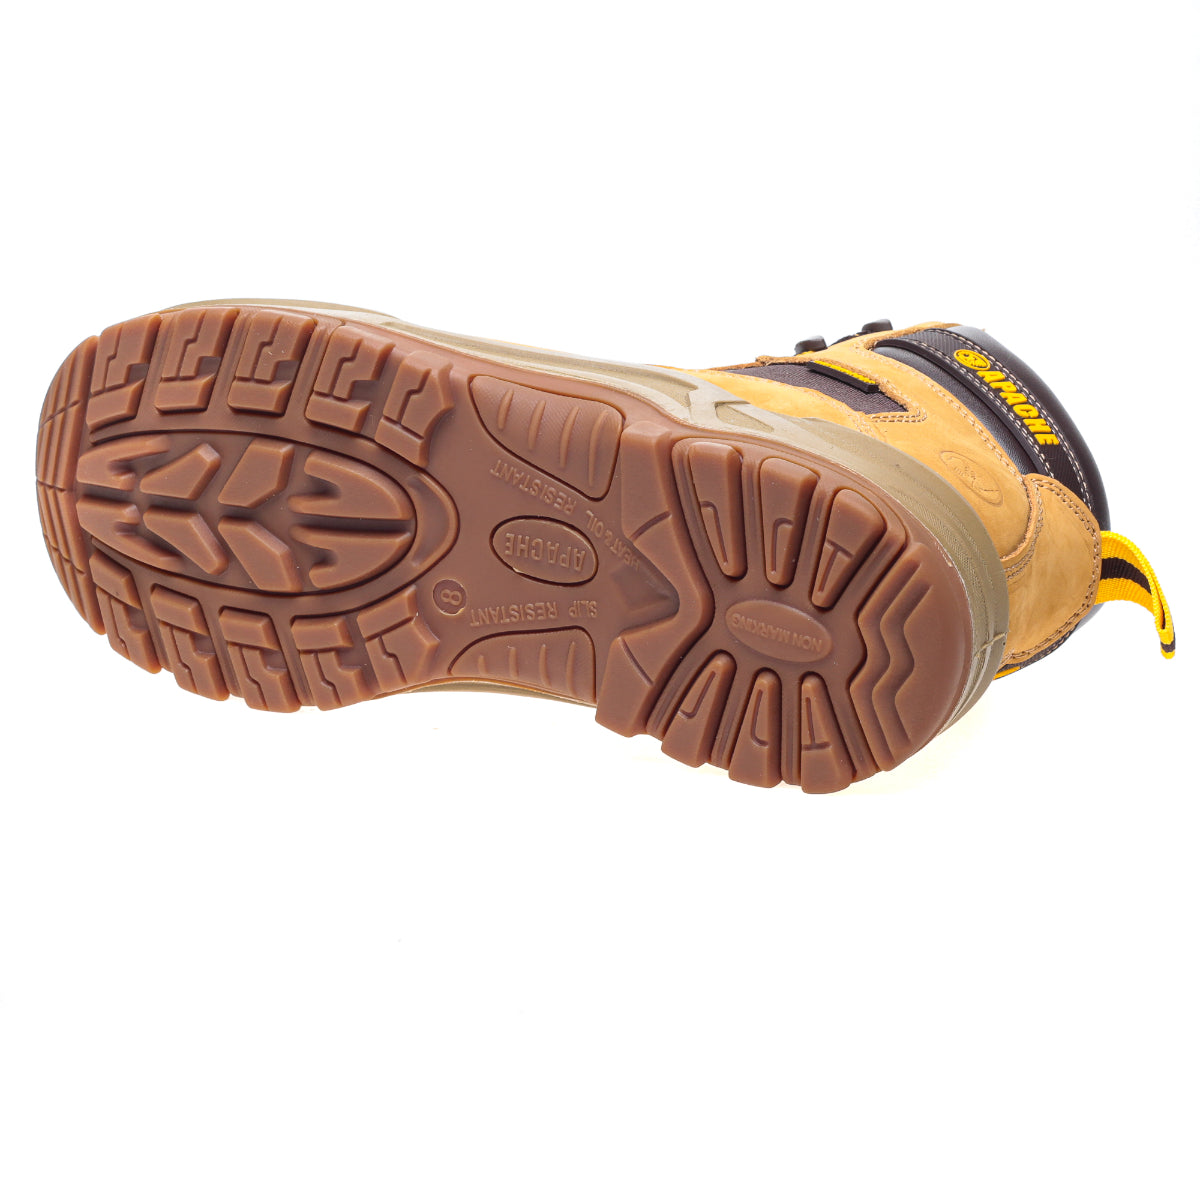 Apache Honey Nubuck Metal Free Waterproof Safety Boot